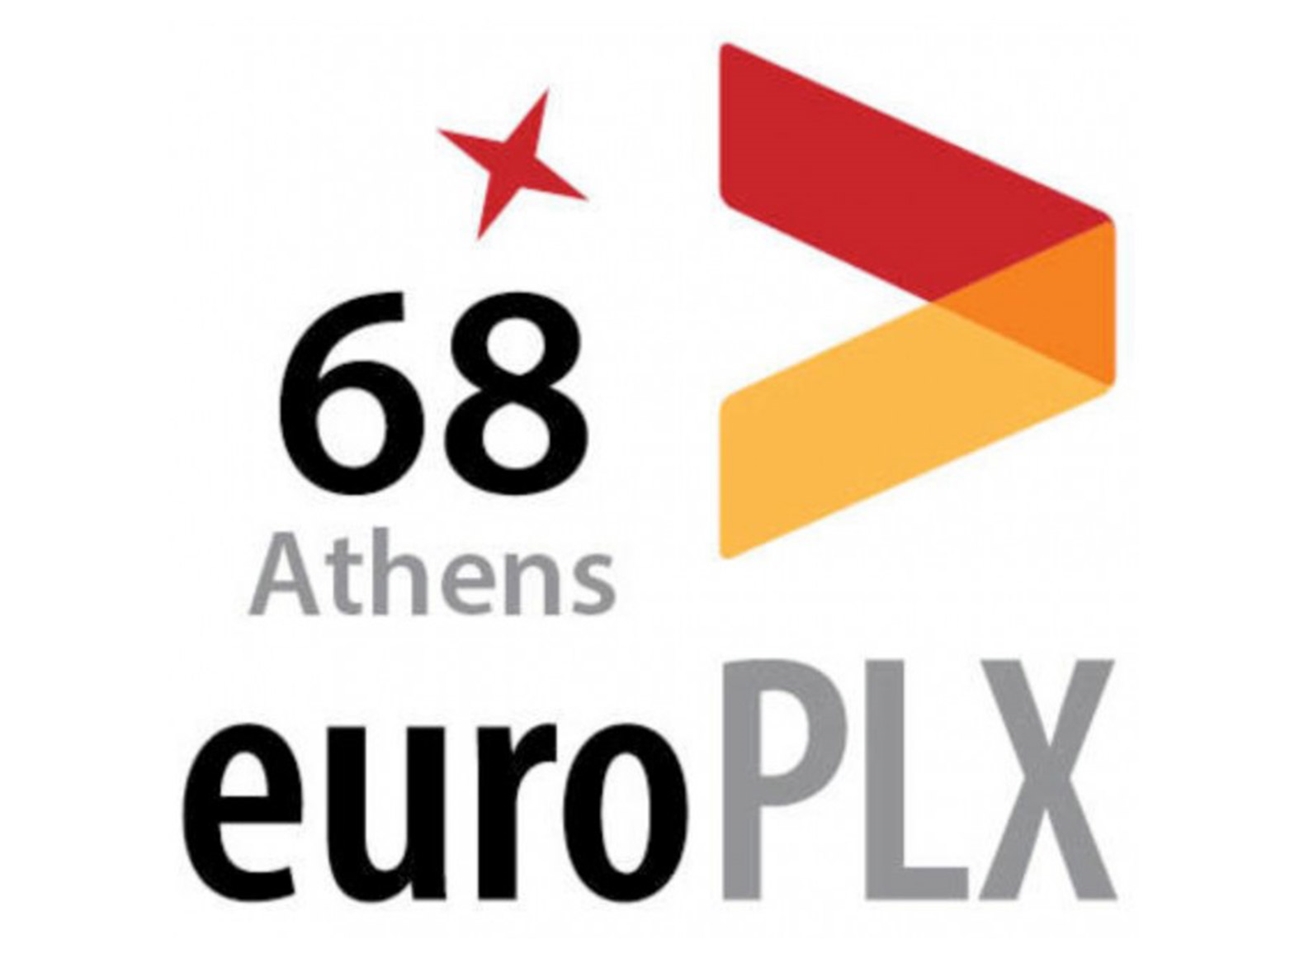 Meet us at euroPLX 68 Athens